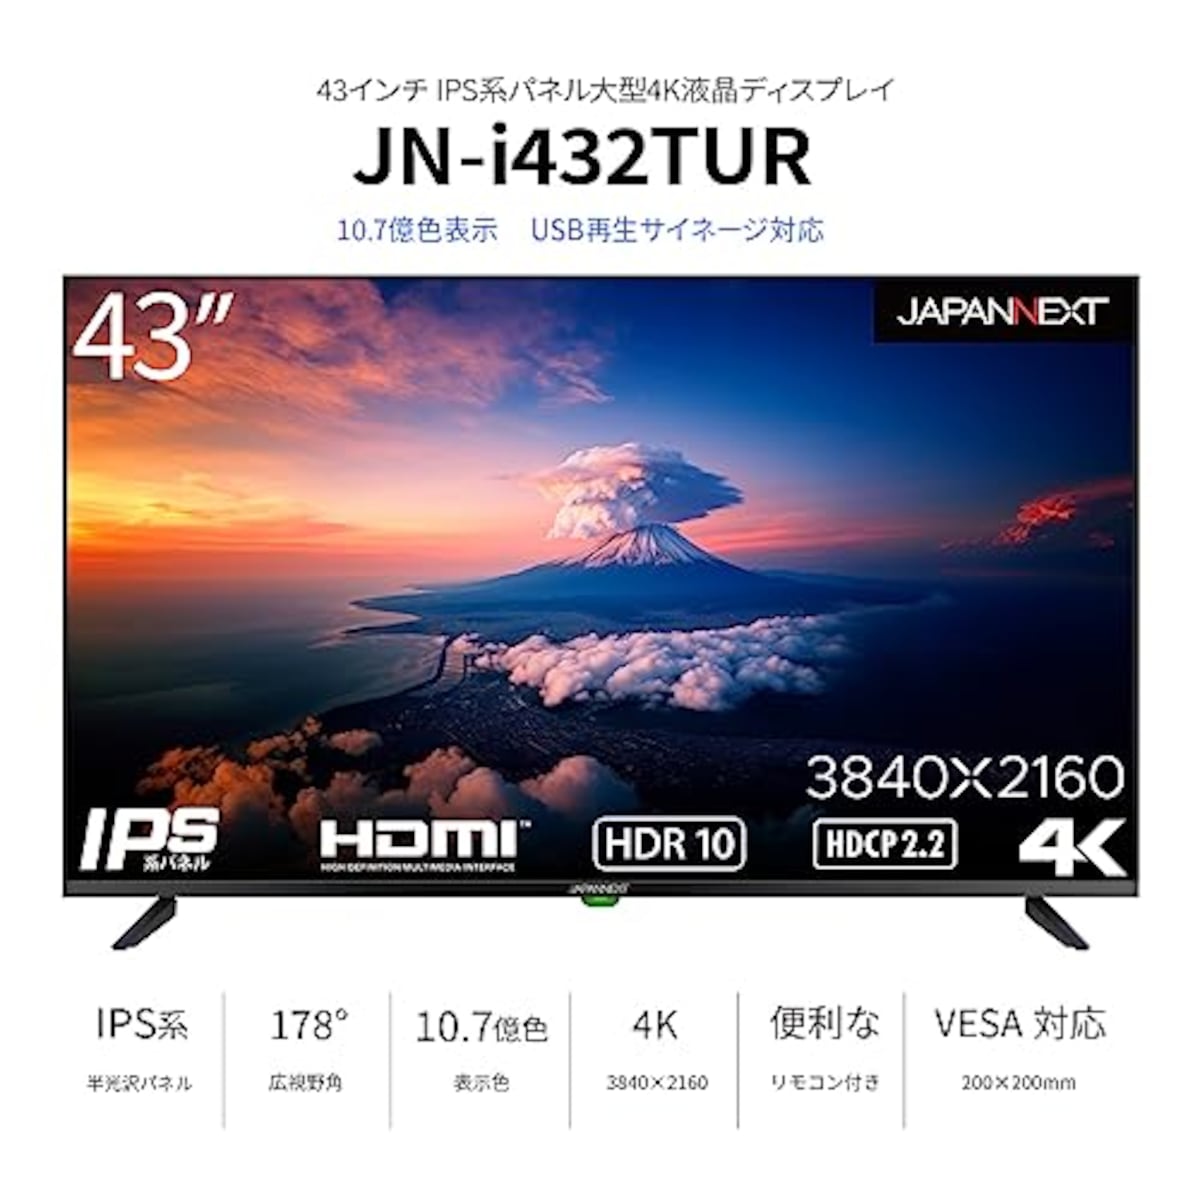  【Amazon.co.jp限定】JAPANNEXT 43インチ 大型4K(3840x2160)液晶ディスプレイ JN-i432TUR HDR対応 HDMI USB再生対応 サイネージ画像3 